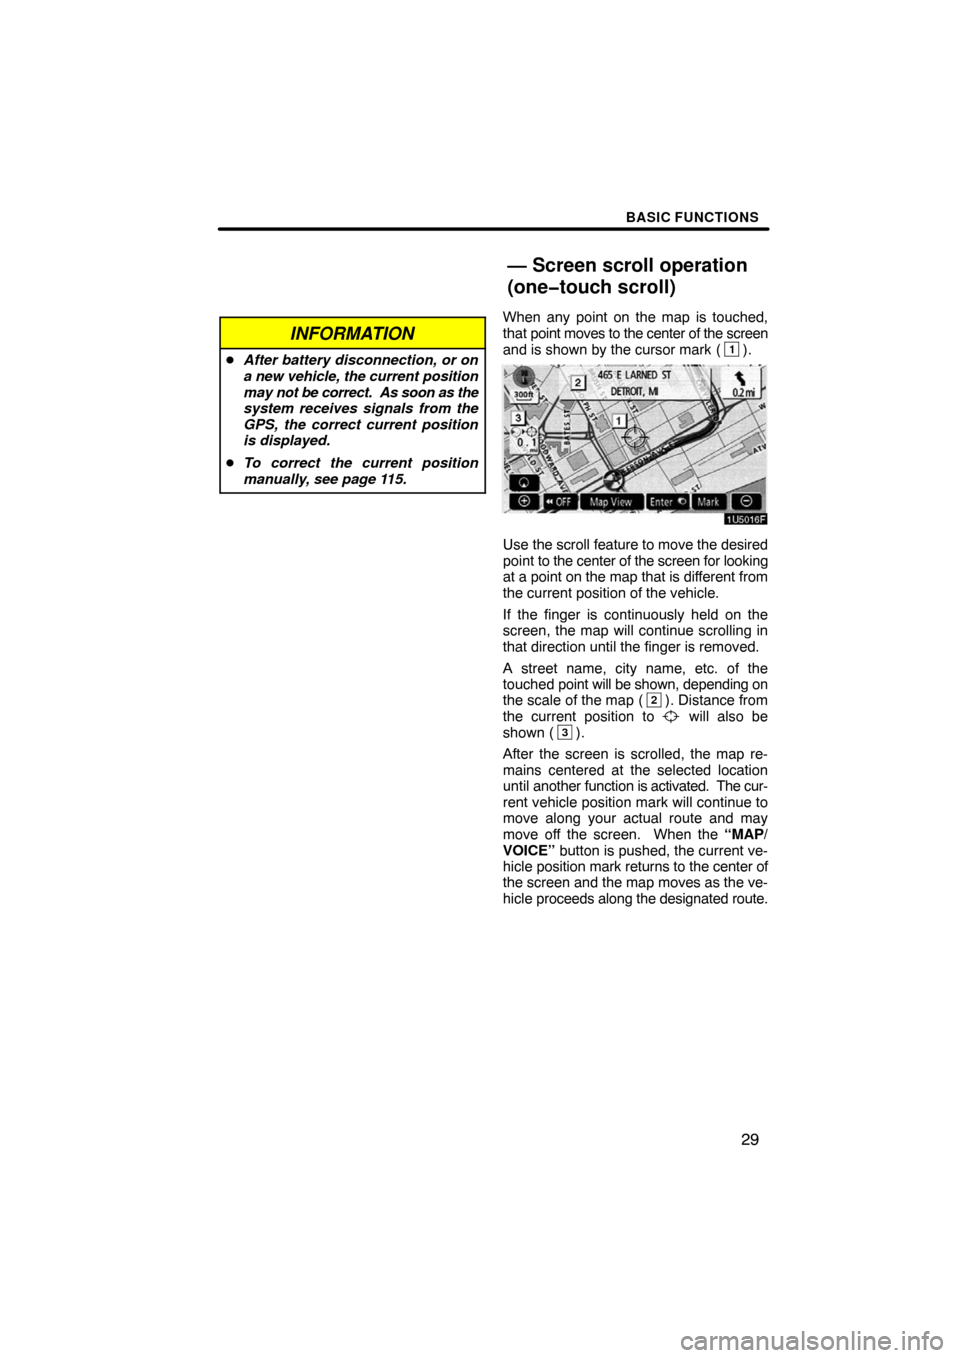 TOYOTA CAMRY 2008 XV40 / 8.G Navigation Manual BASIC FUNCTIONS
29
INFORMATION
After battery disconnection, or on
a new vehicle, the current position
may not be correct.  As soon as the
system receives signals from the
GPS, the correct current pos